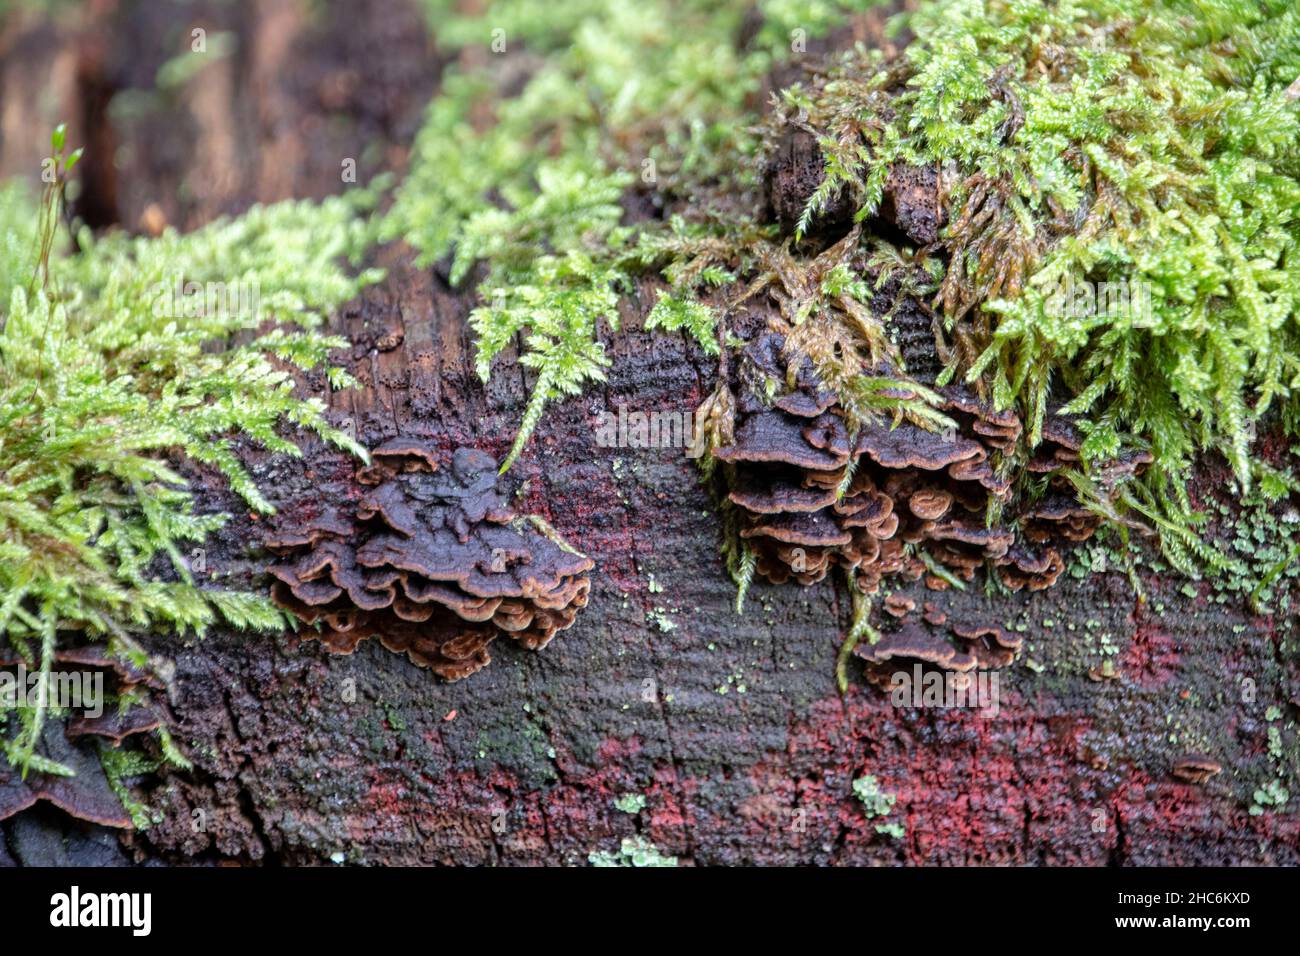 Hymenochaete rubiginosa oak curtain crust mushroom growing on tree in Palatinate Forest Stock Photo